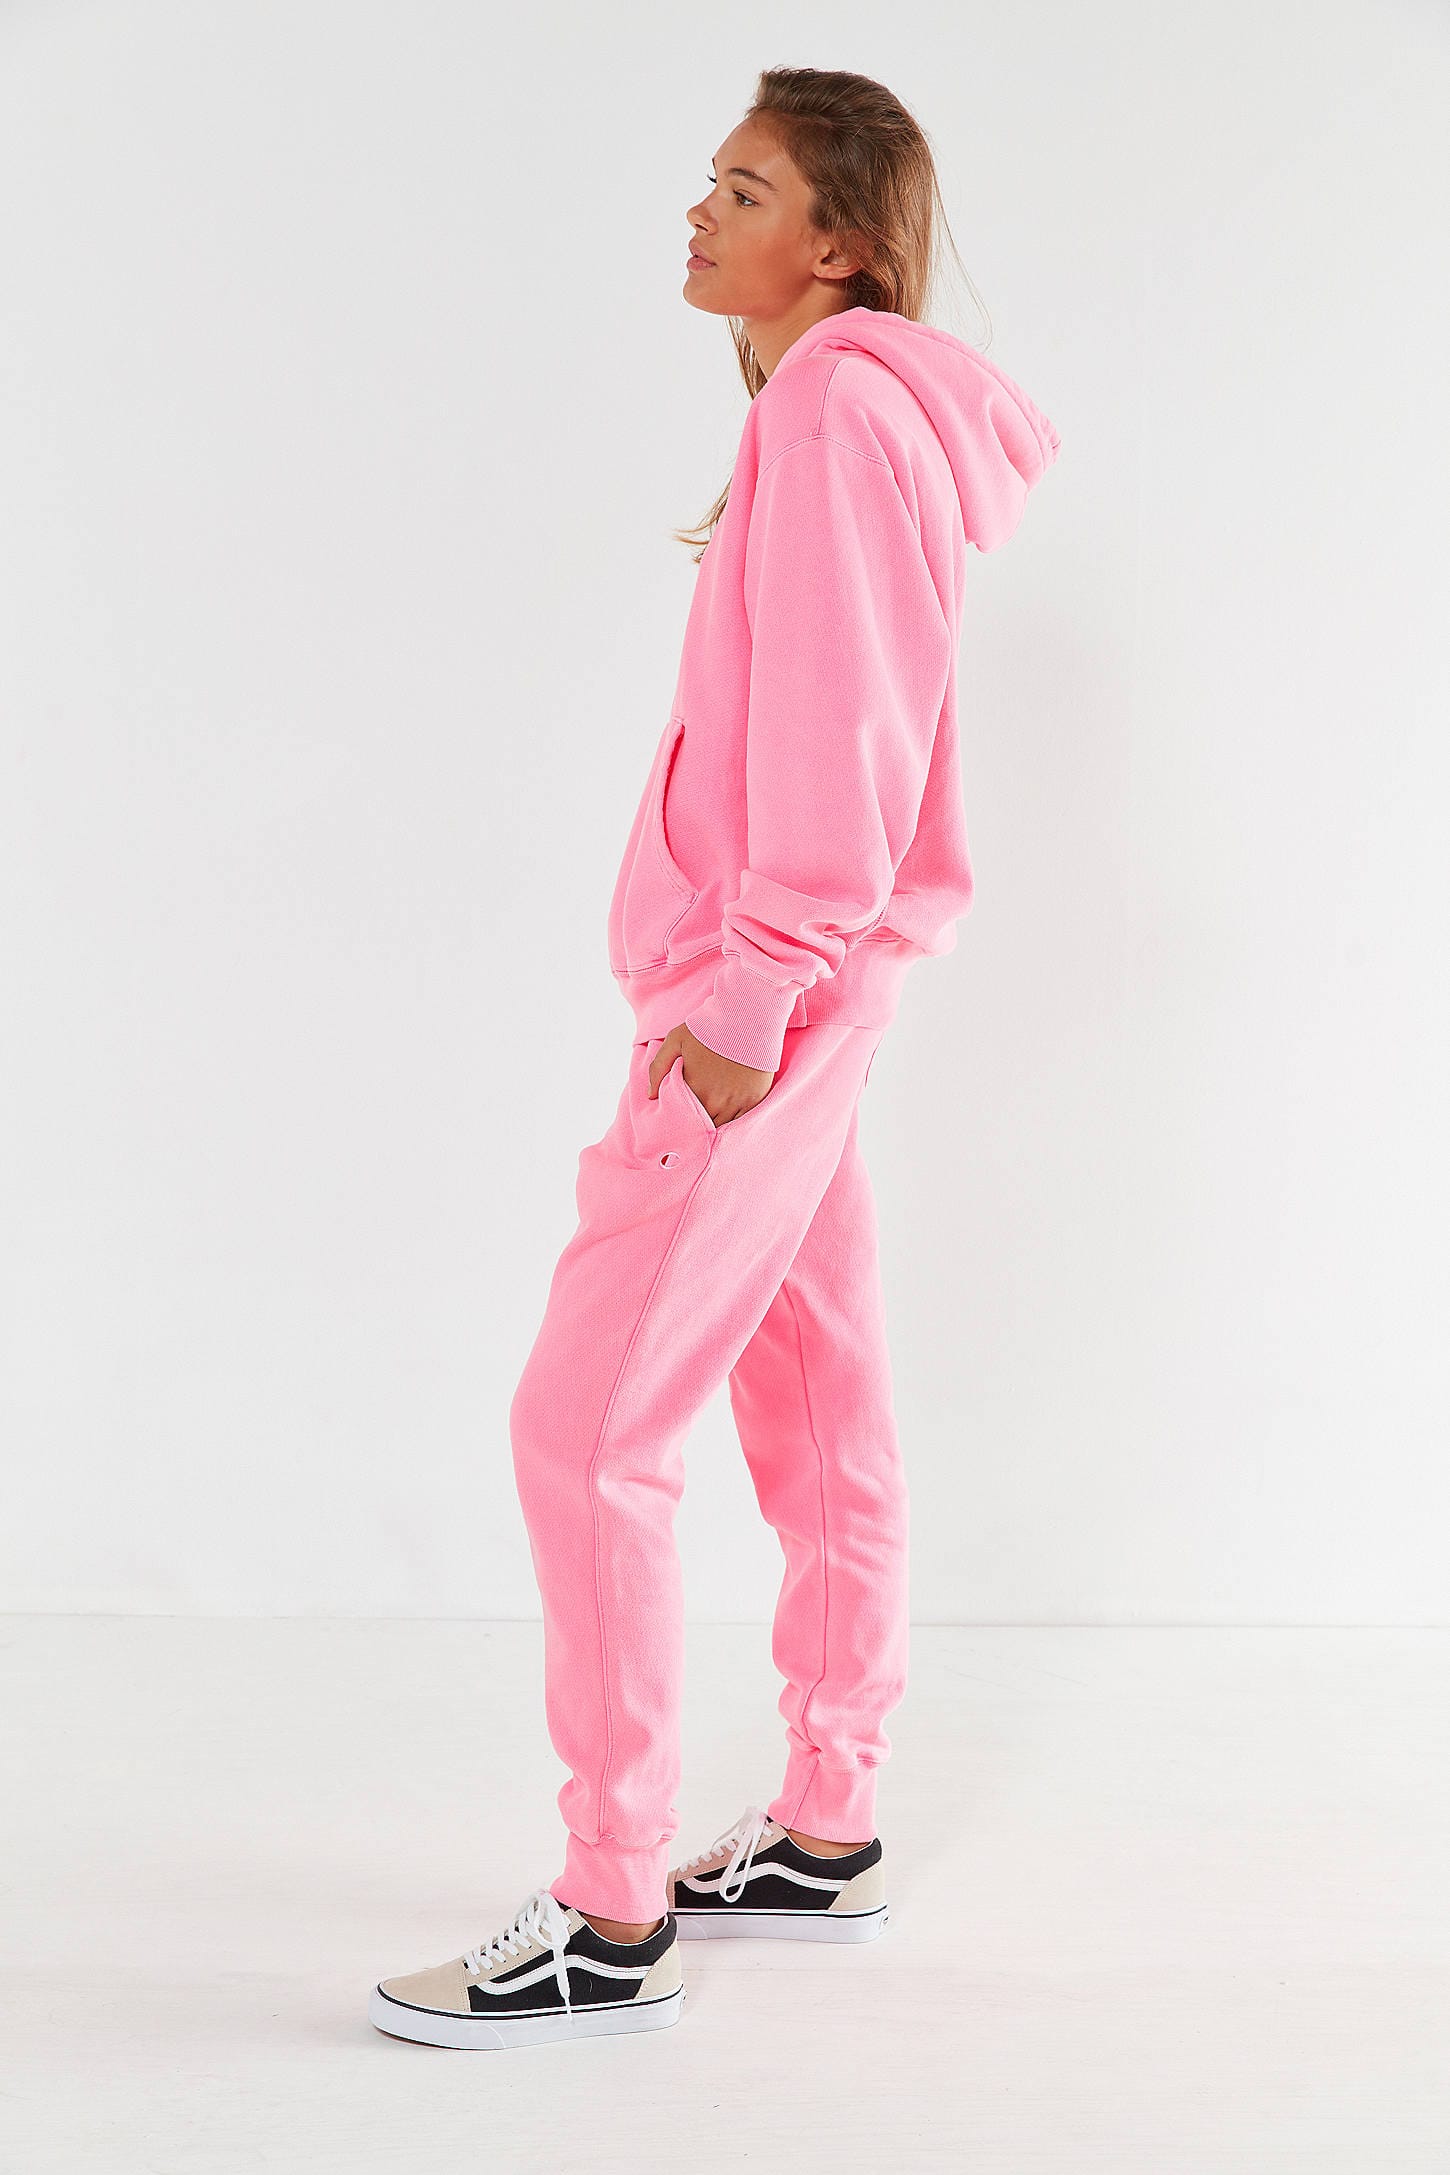 Pink Hoodie \u0026 Pants Are a Cozy Uniform 